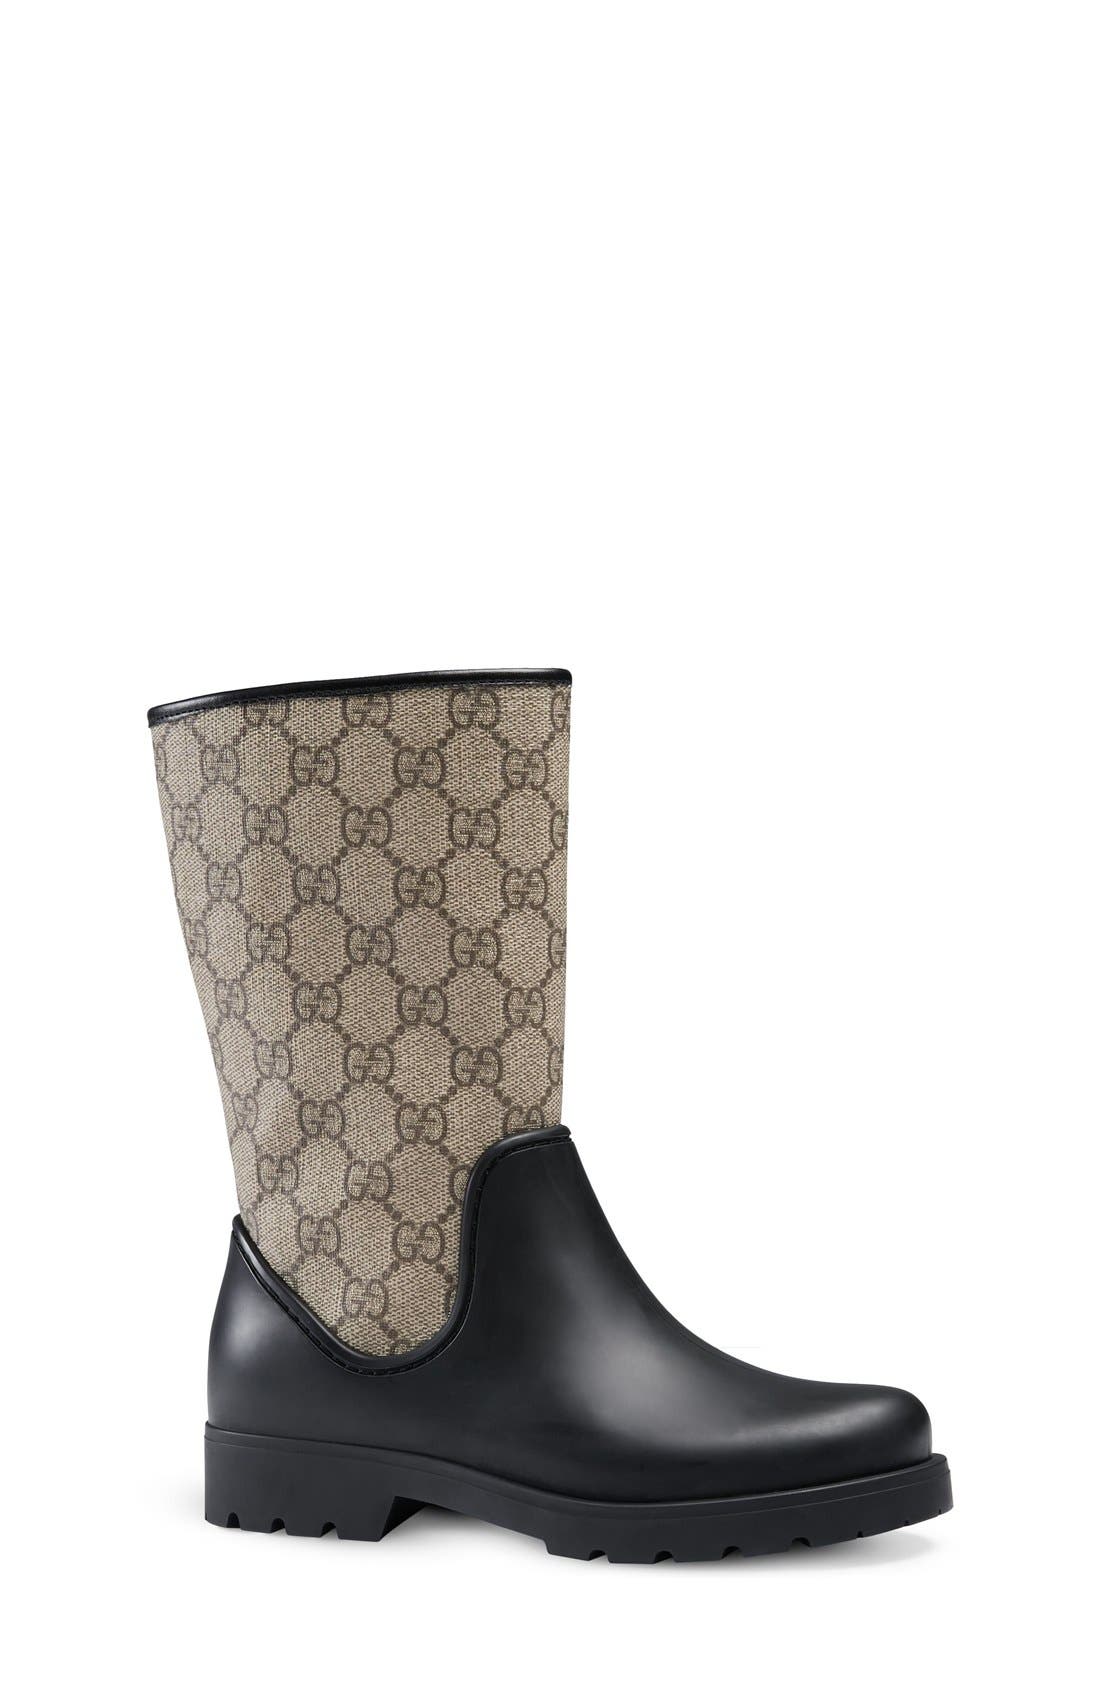 black gucci rain boots